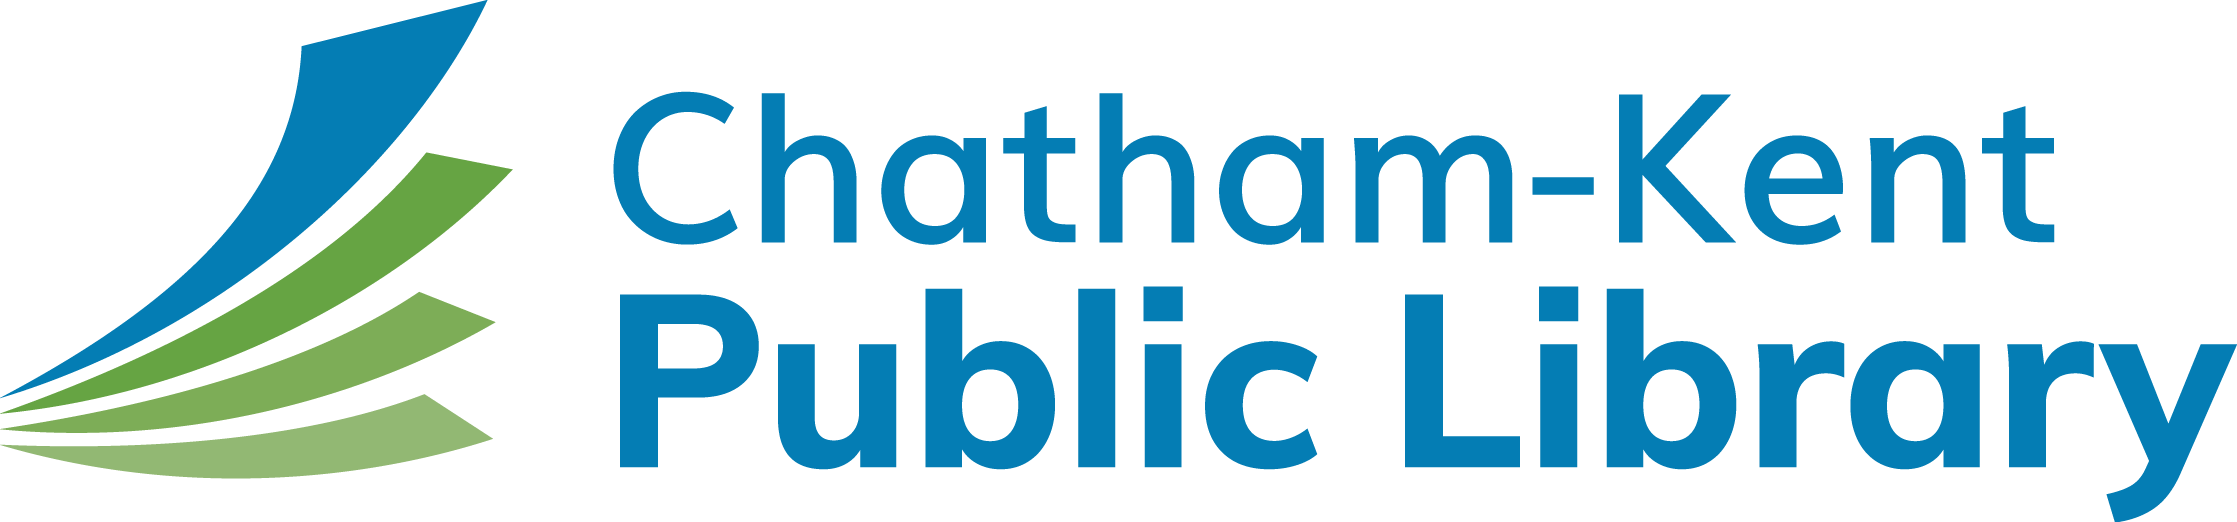 Chatham-Kent Public Library logo